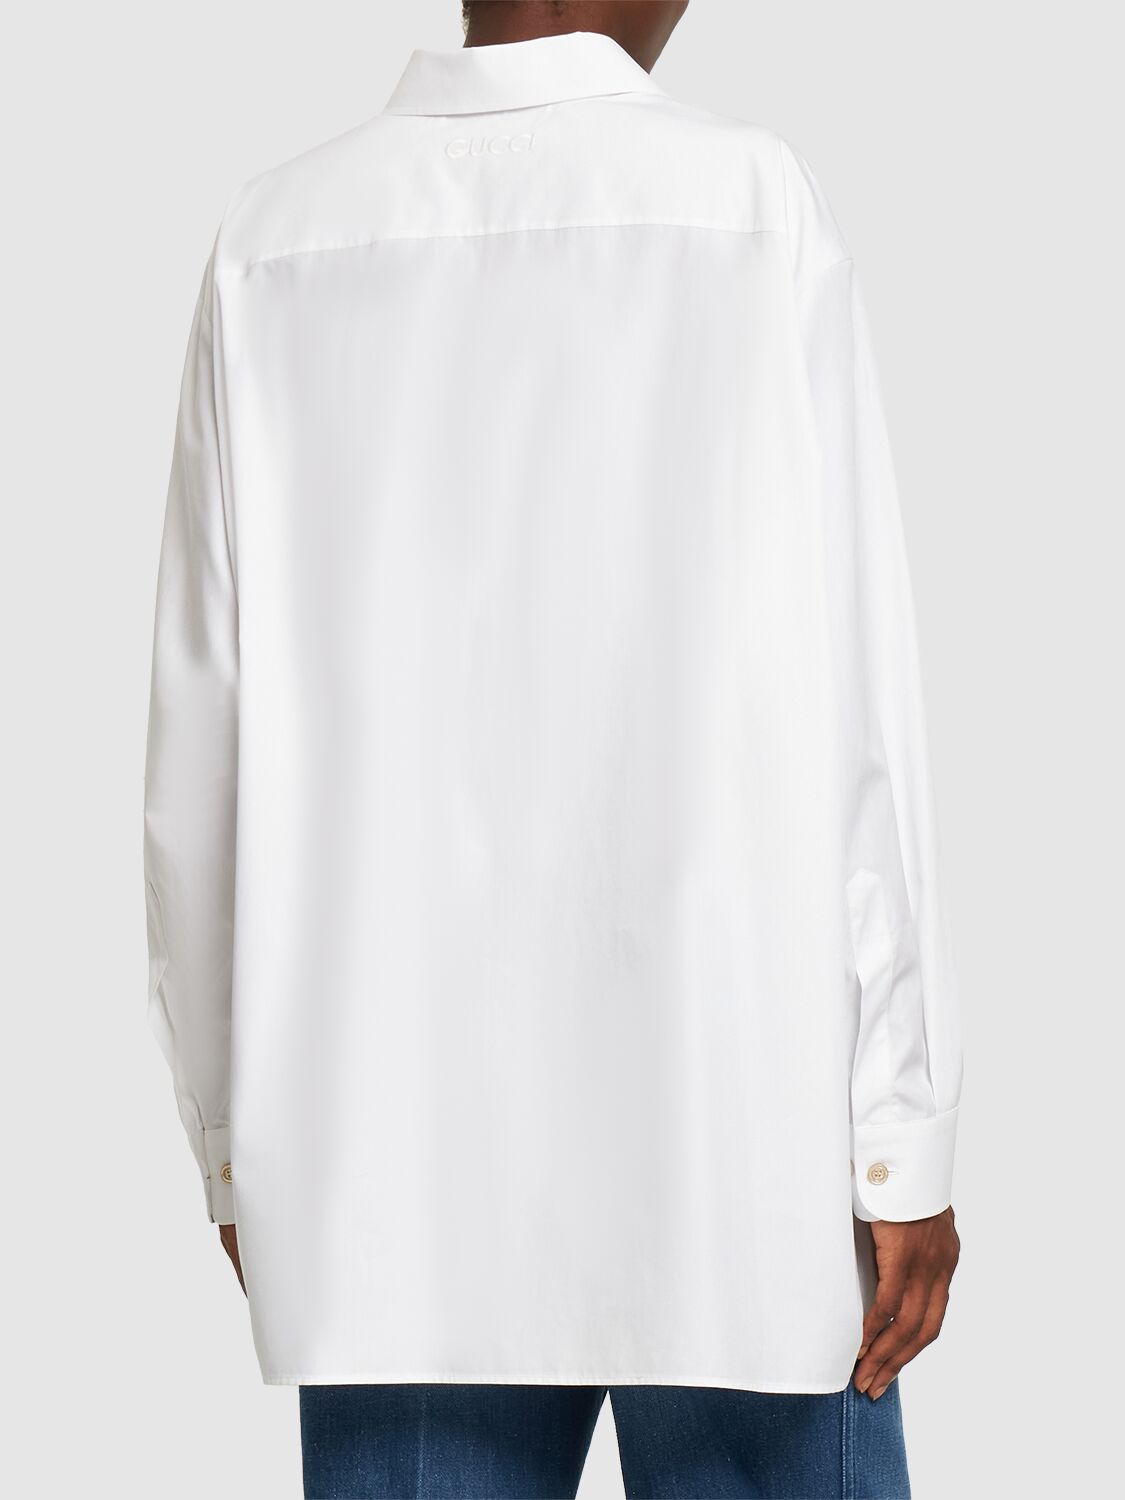 GUCCI: shirt in stretch cotton poplin - White | Gucci shirt 748989XWAYS  online at